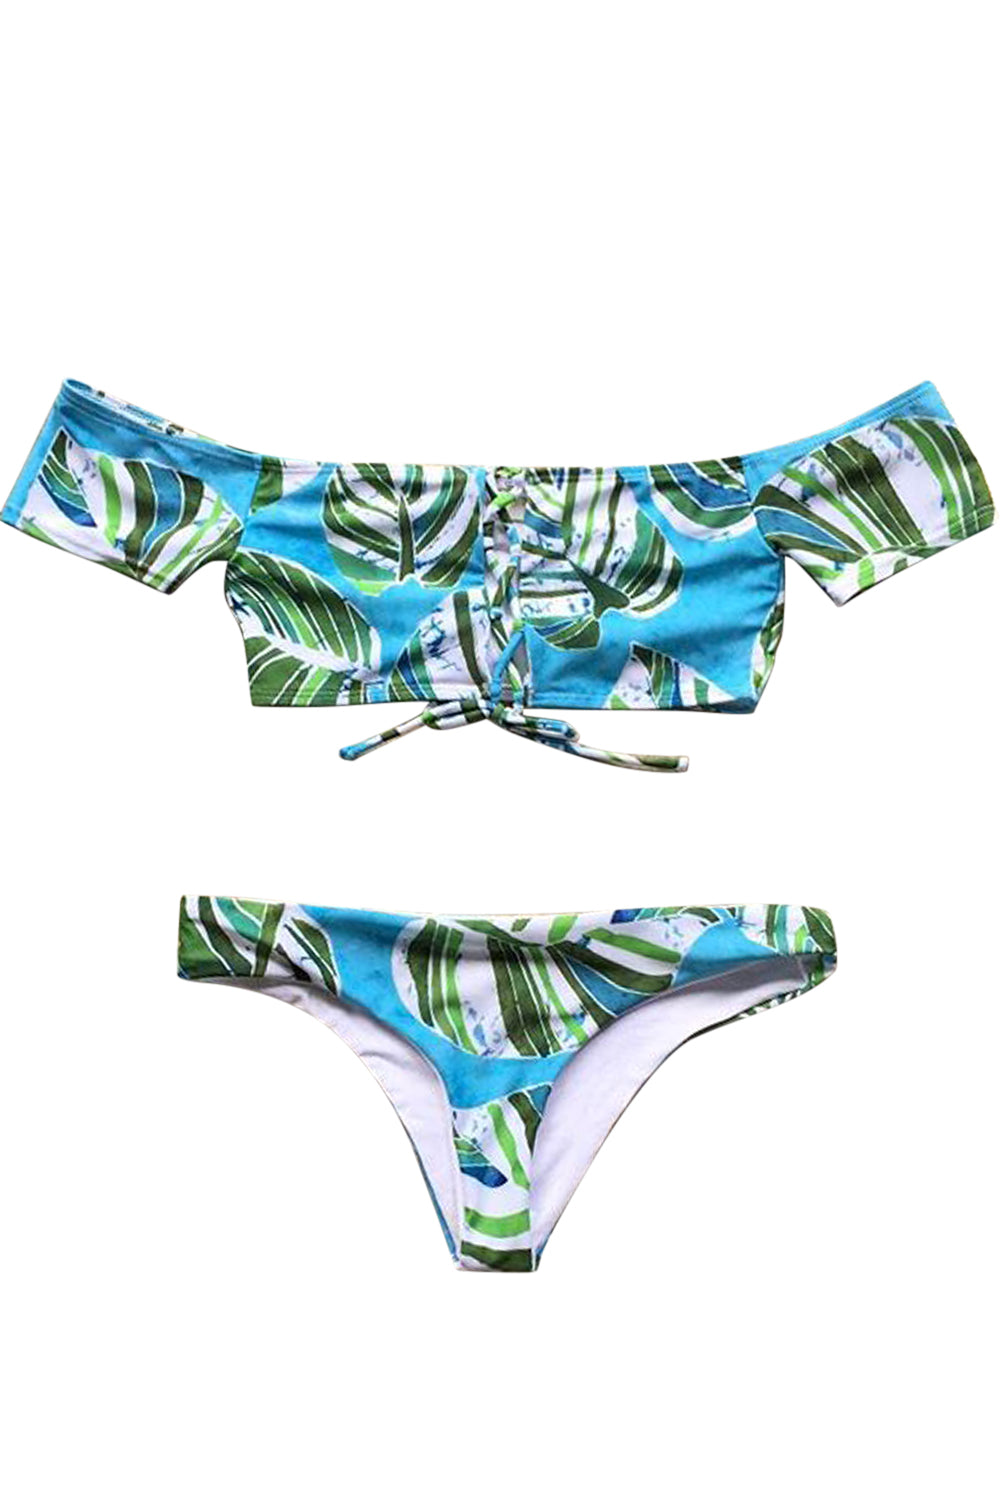 Iyasson Blue Leaves Printing Off-the-shoulder Bikini Sets